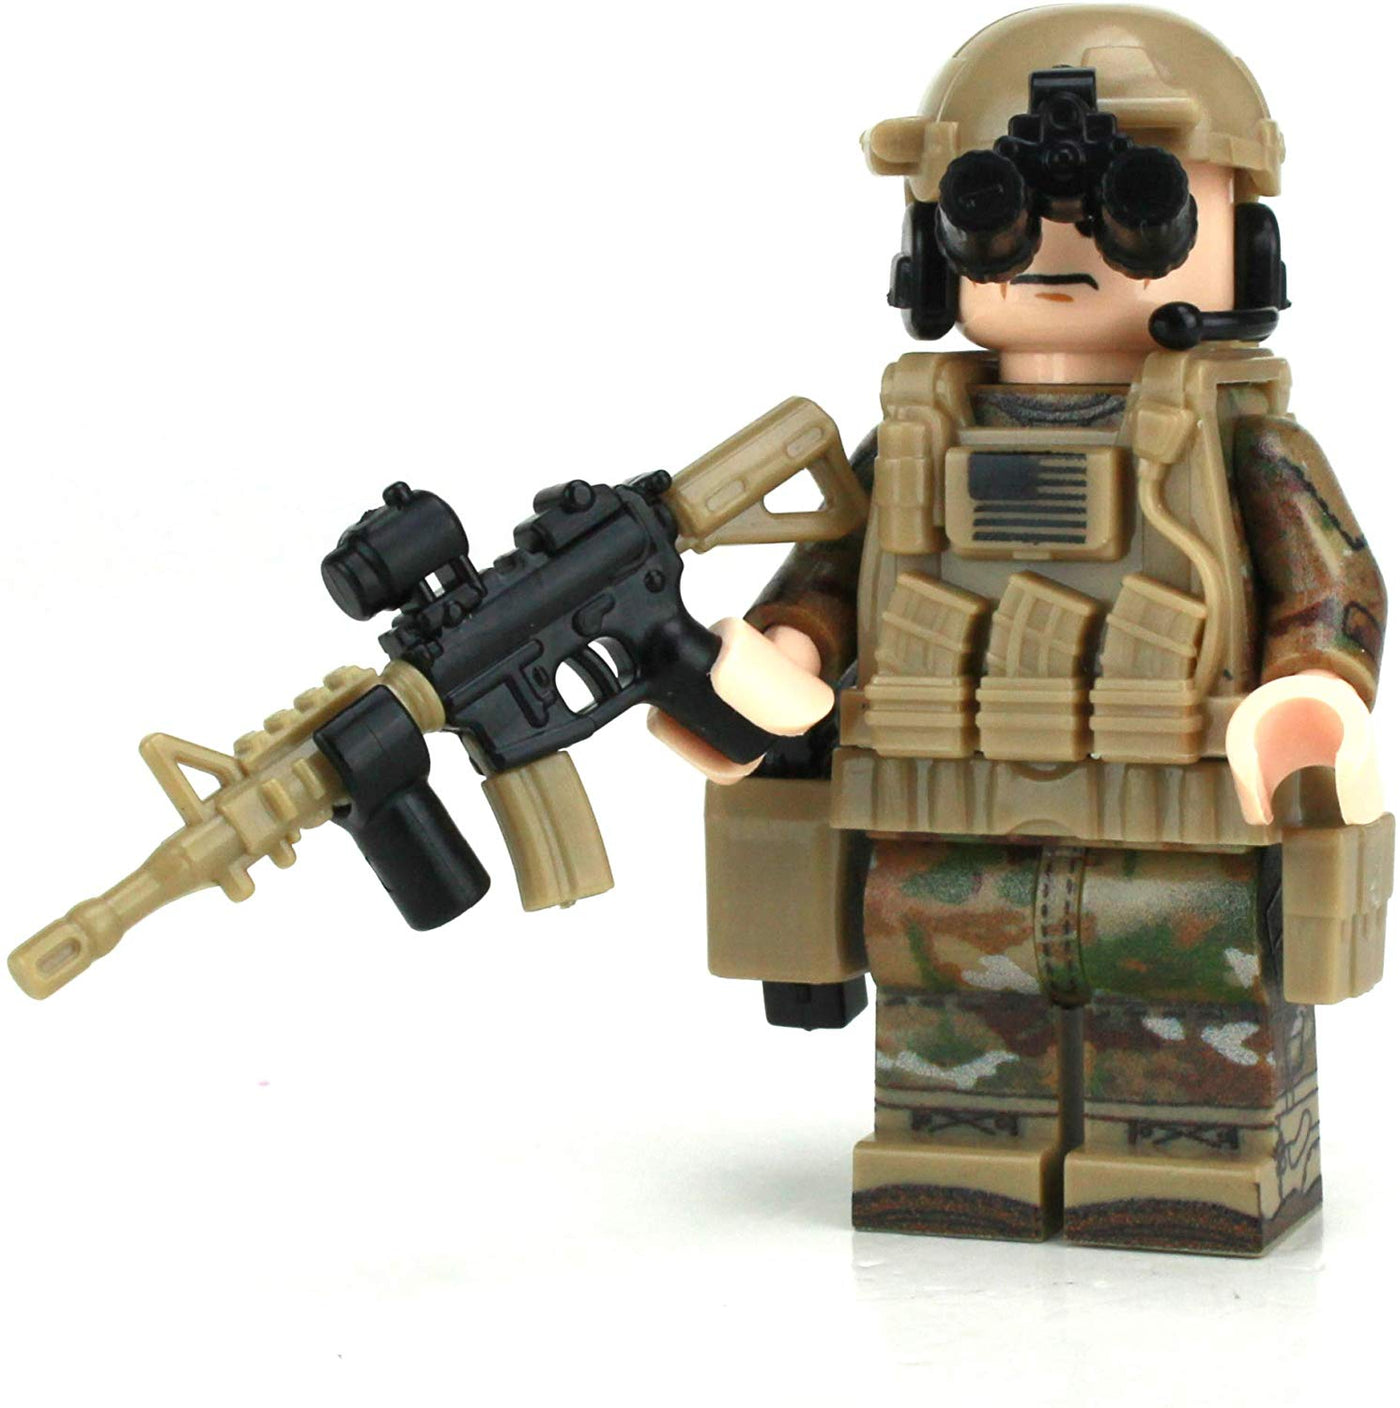 Lego Armies - Army Military